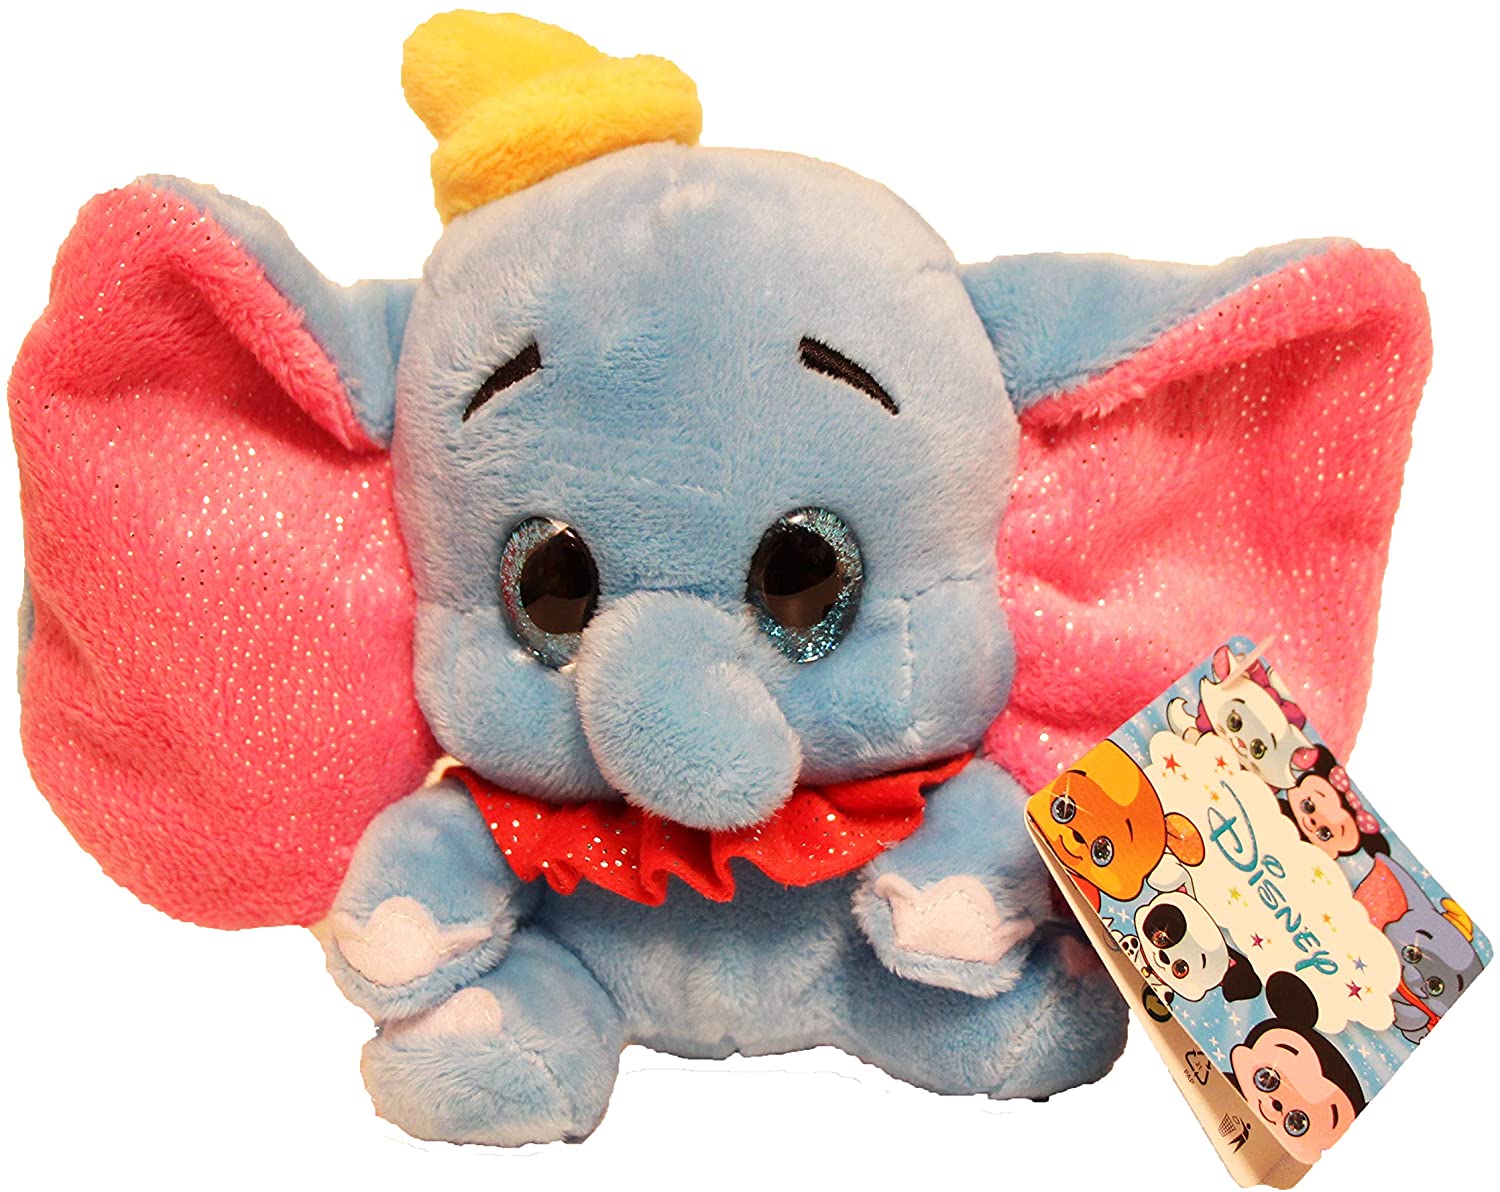 Disney Glitzies Super Soft 15cm 6" Plush Toy with Big Glittery Eyes - Dumbo the Elephant - Toptoys2u